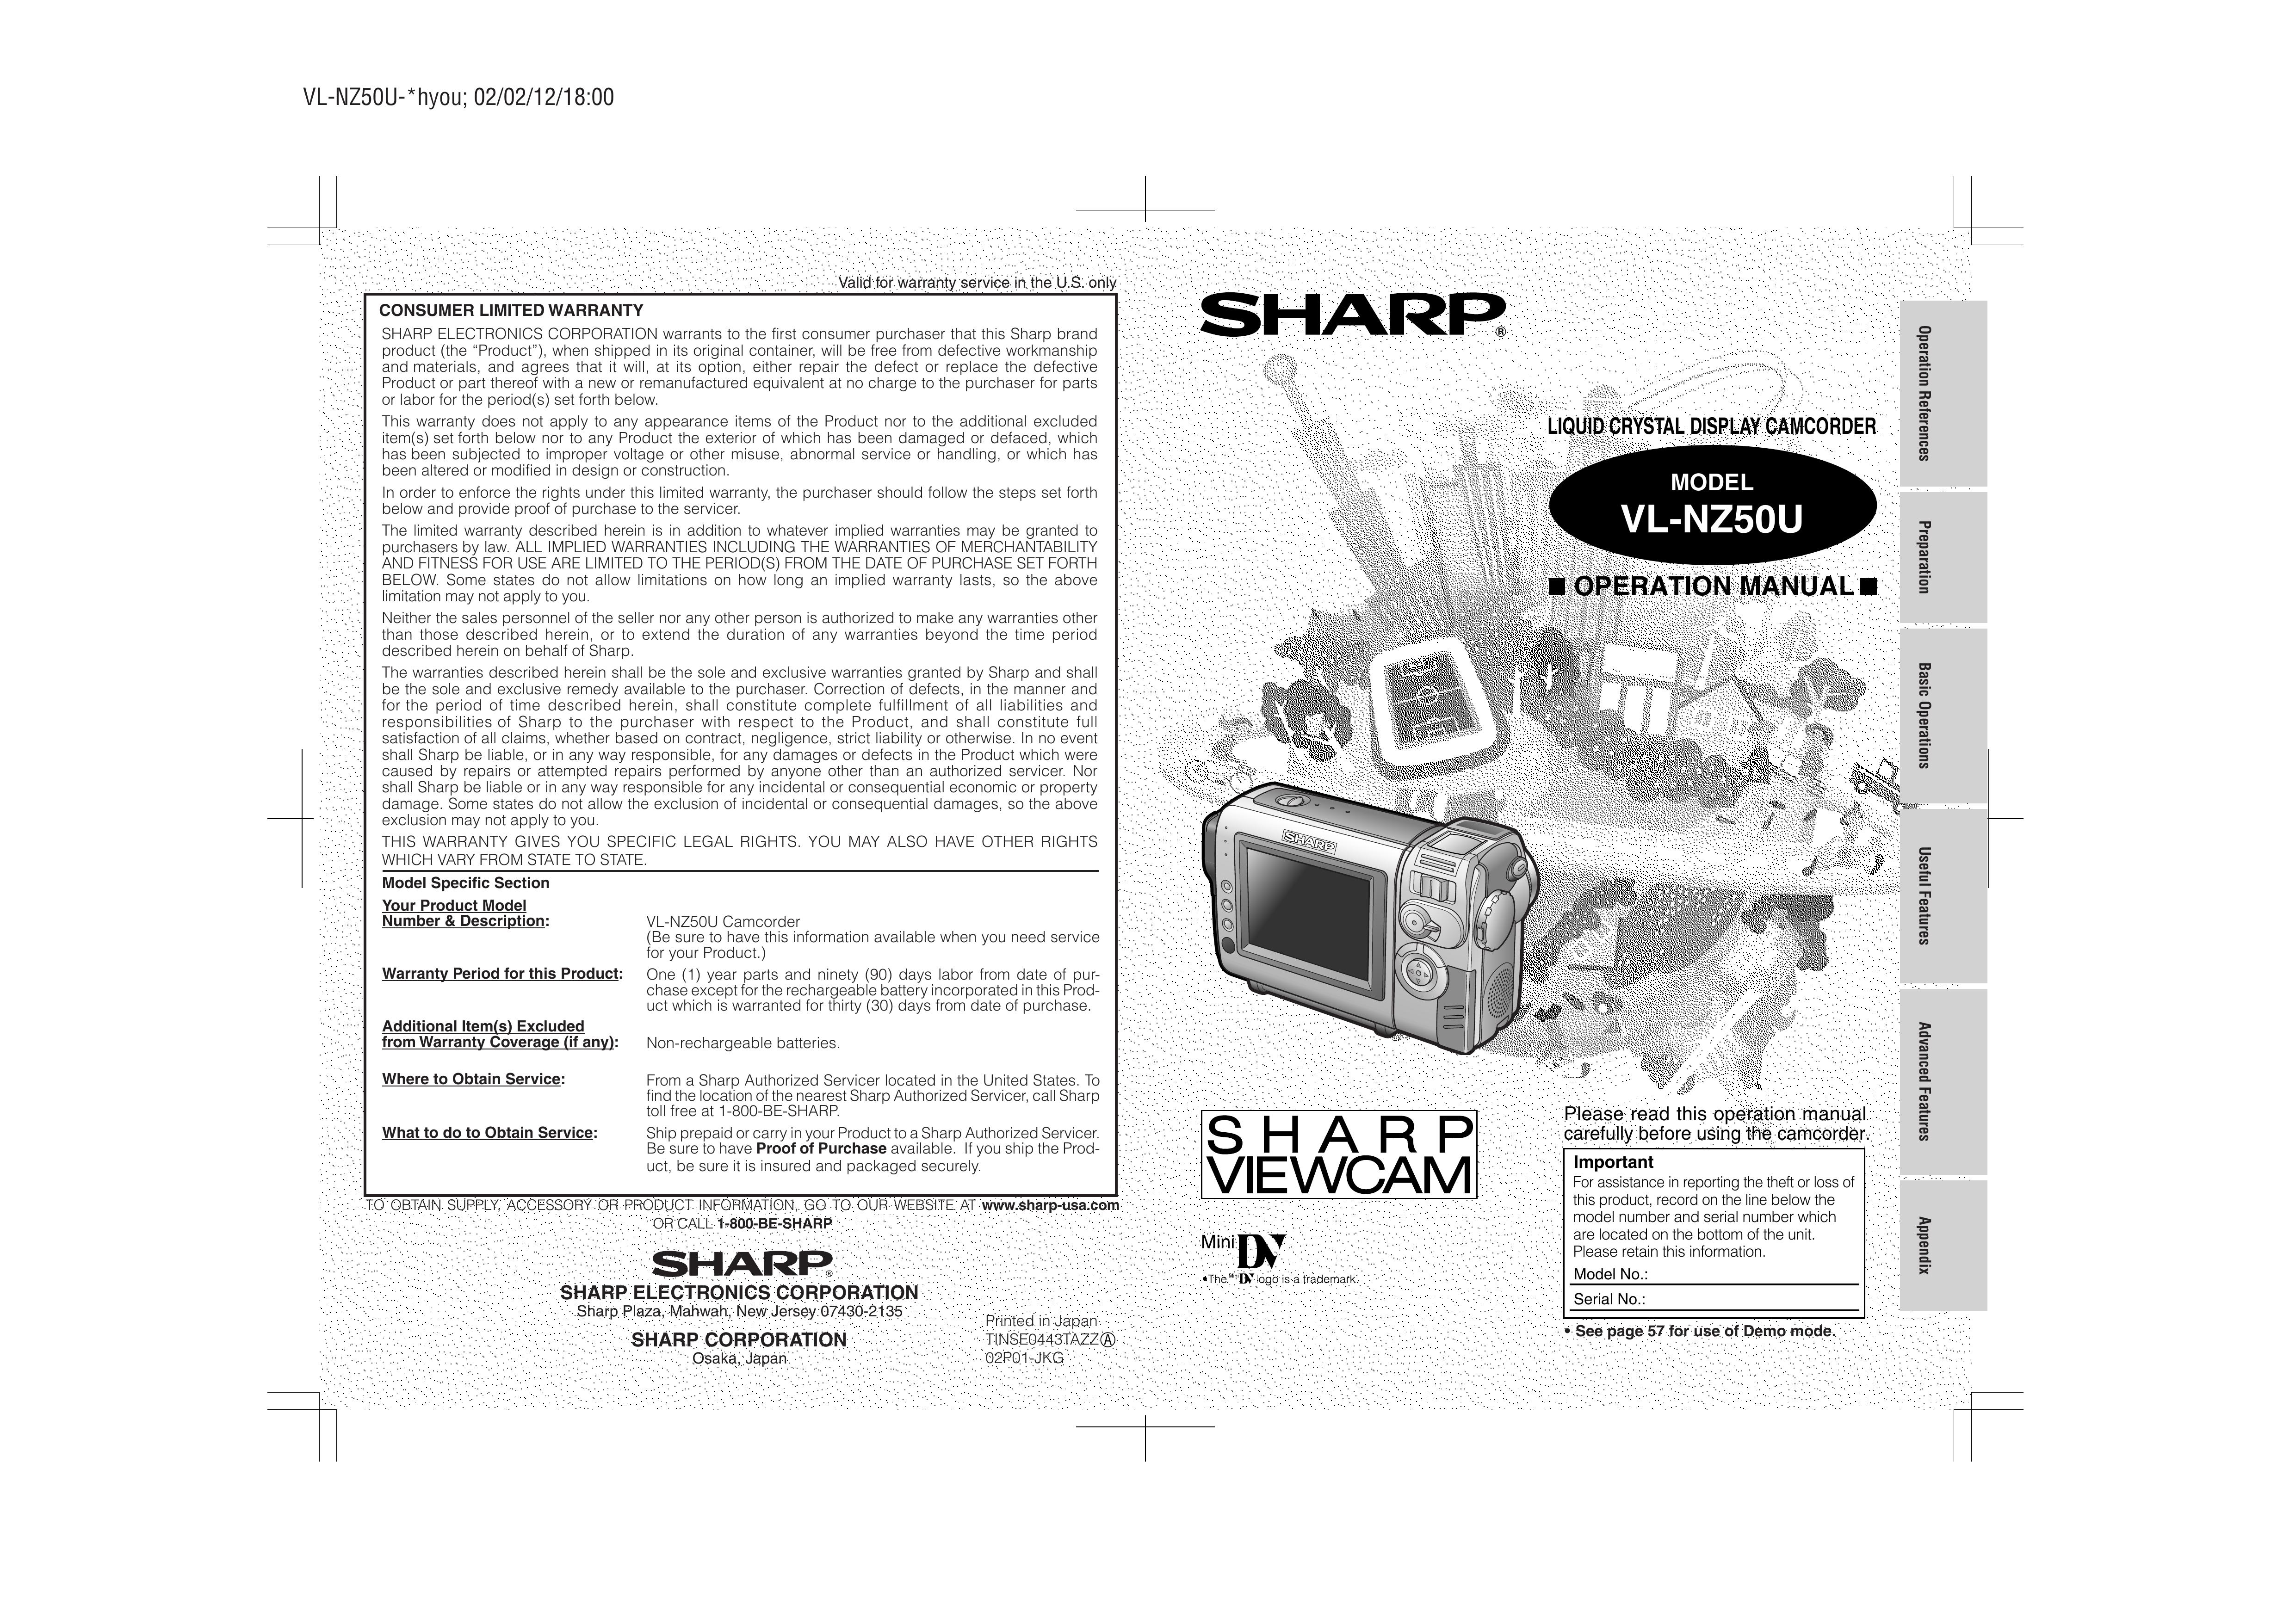 Sharp VL-NZ50U Camcorder User Manual